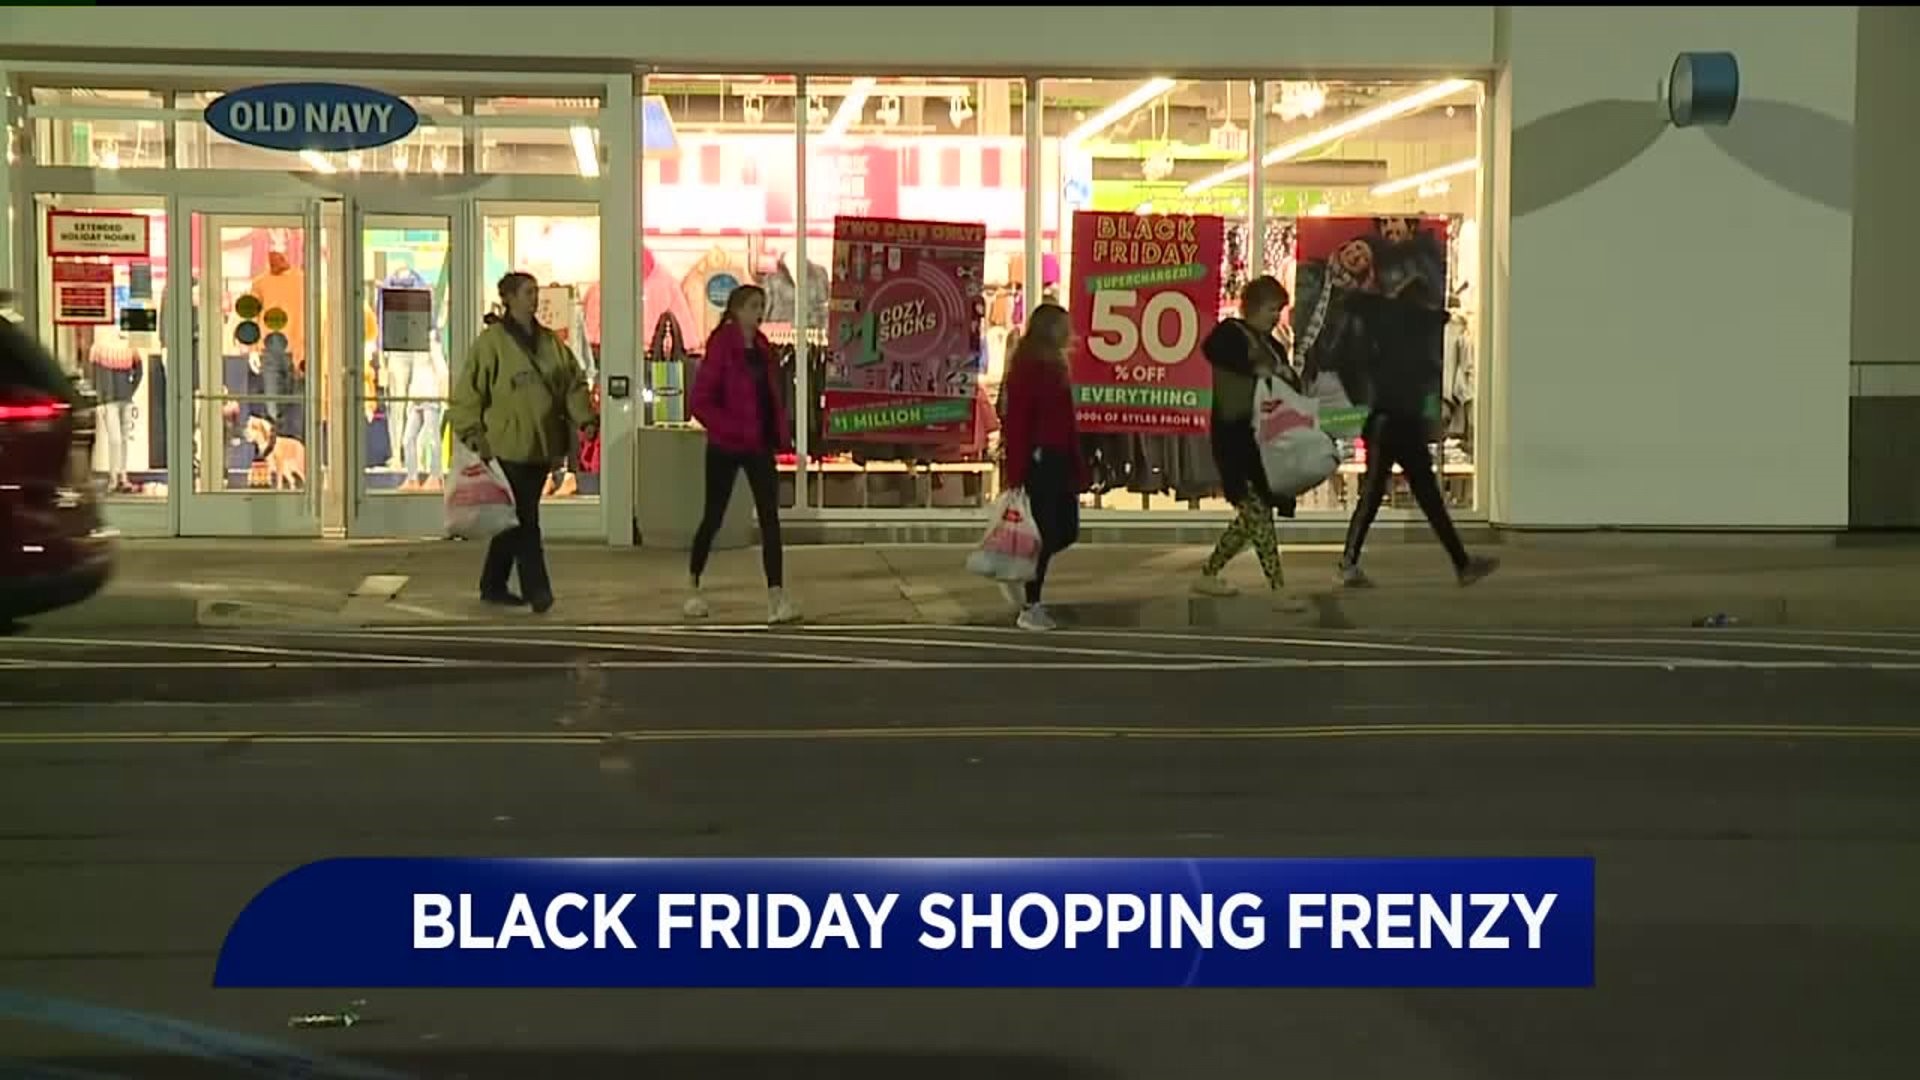 Black Friday Shopping Frenzy at Old Navy